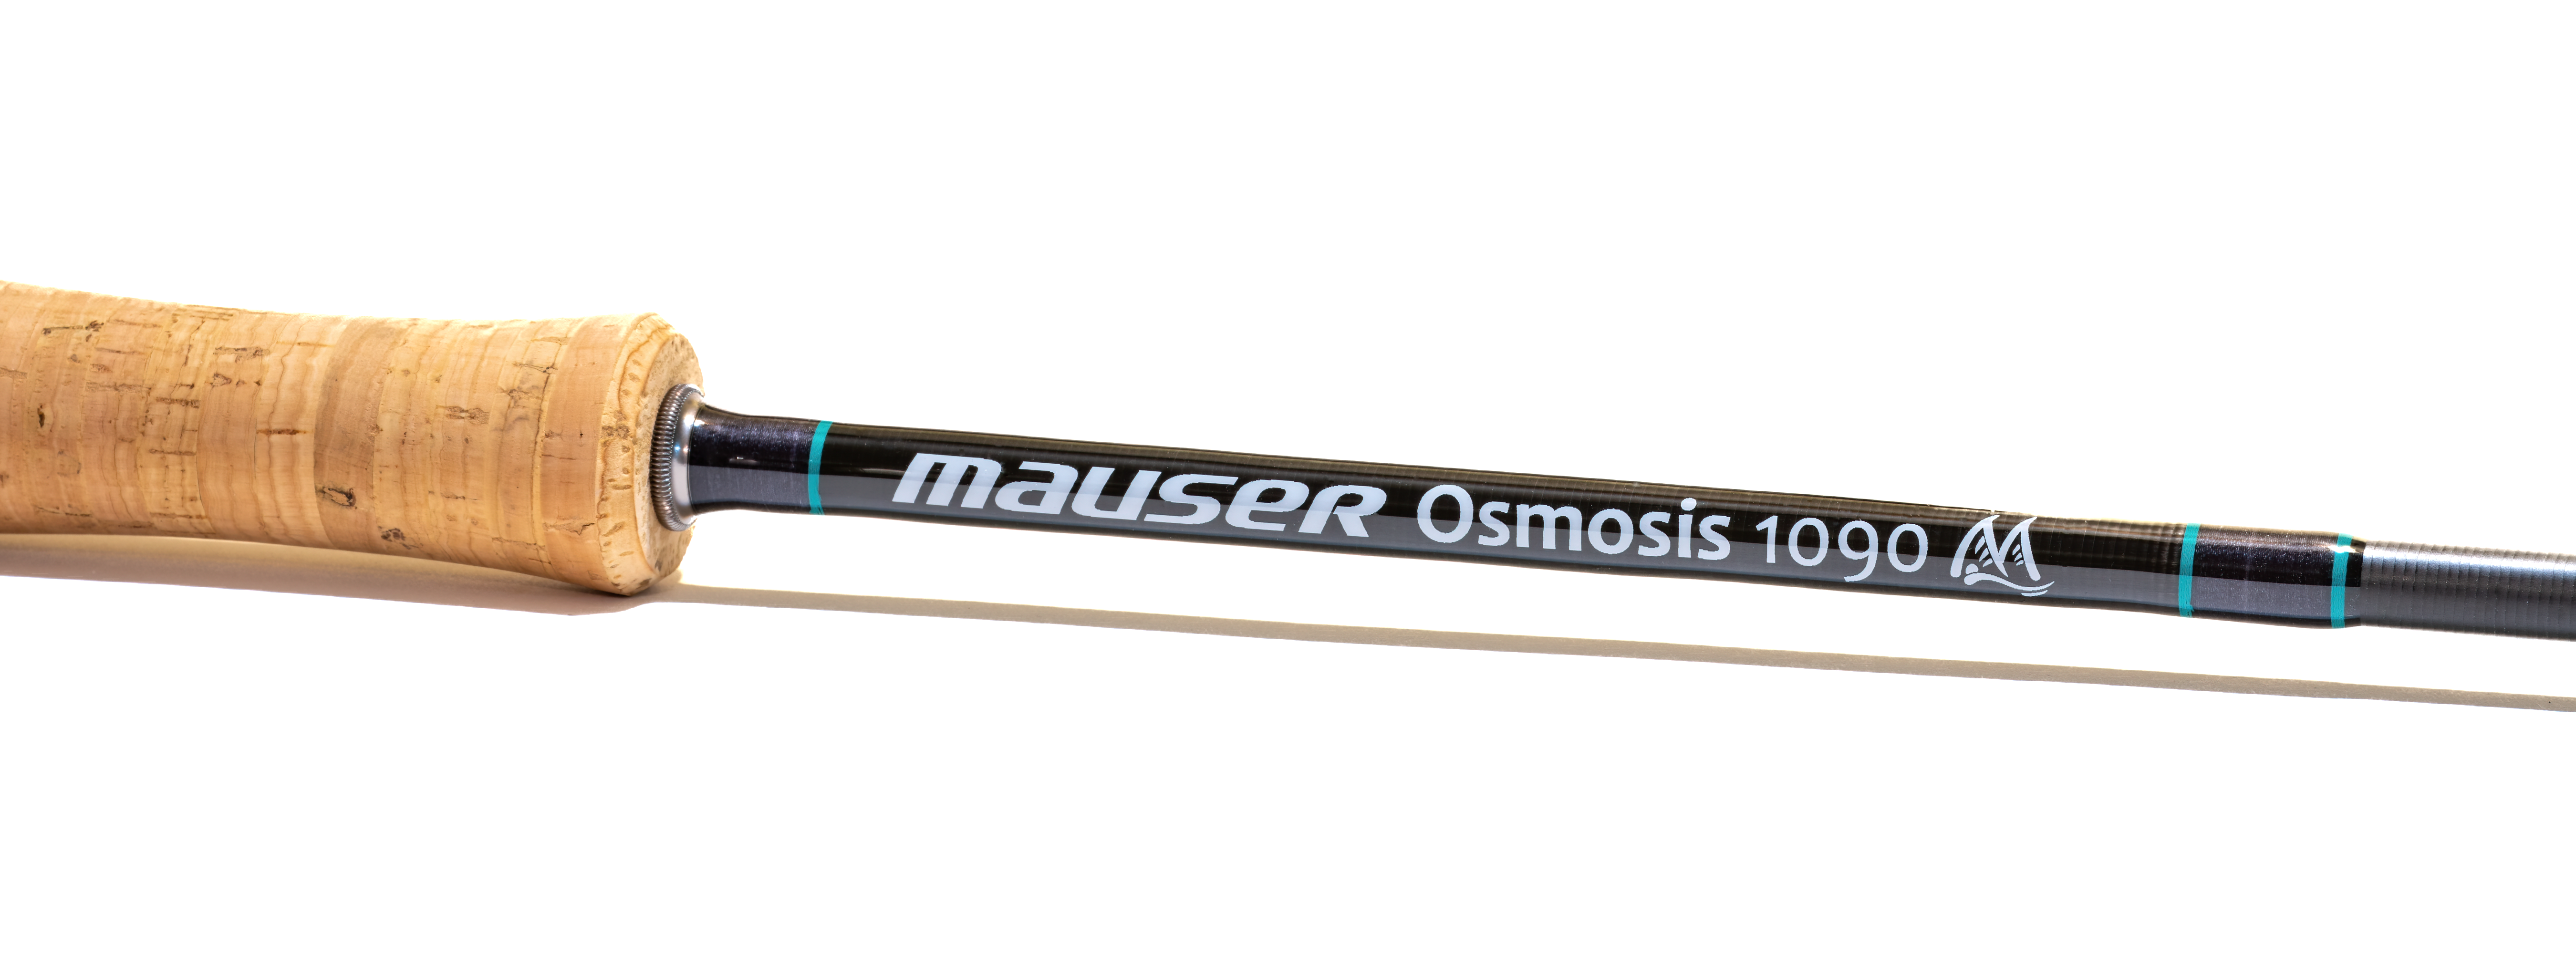 Mauser Osmosis 1090